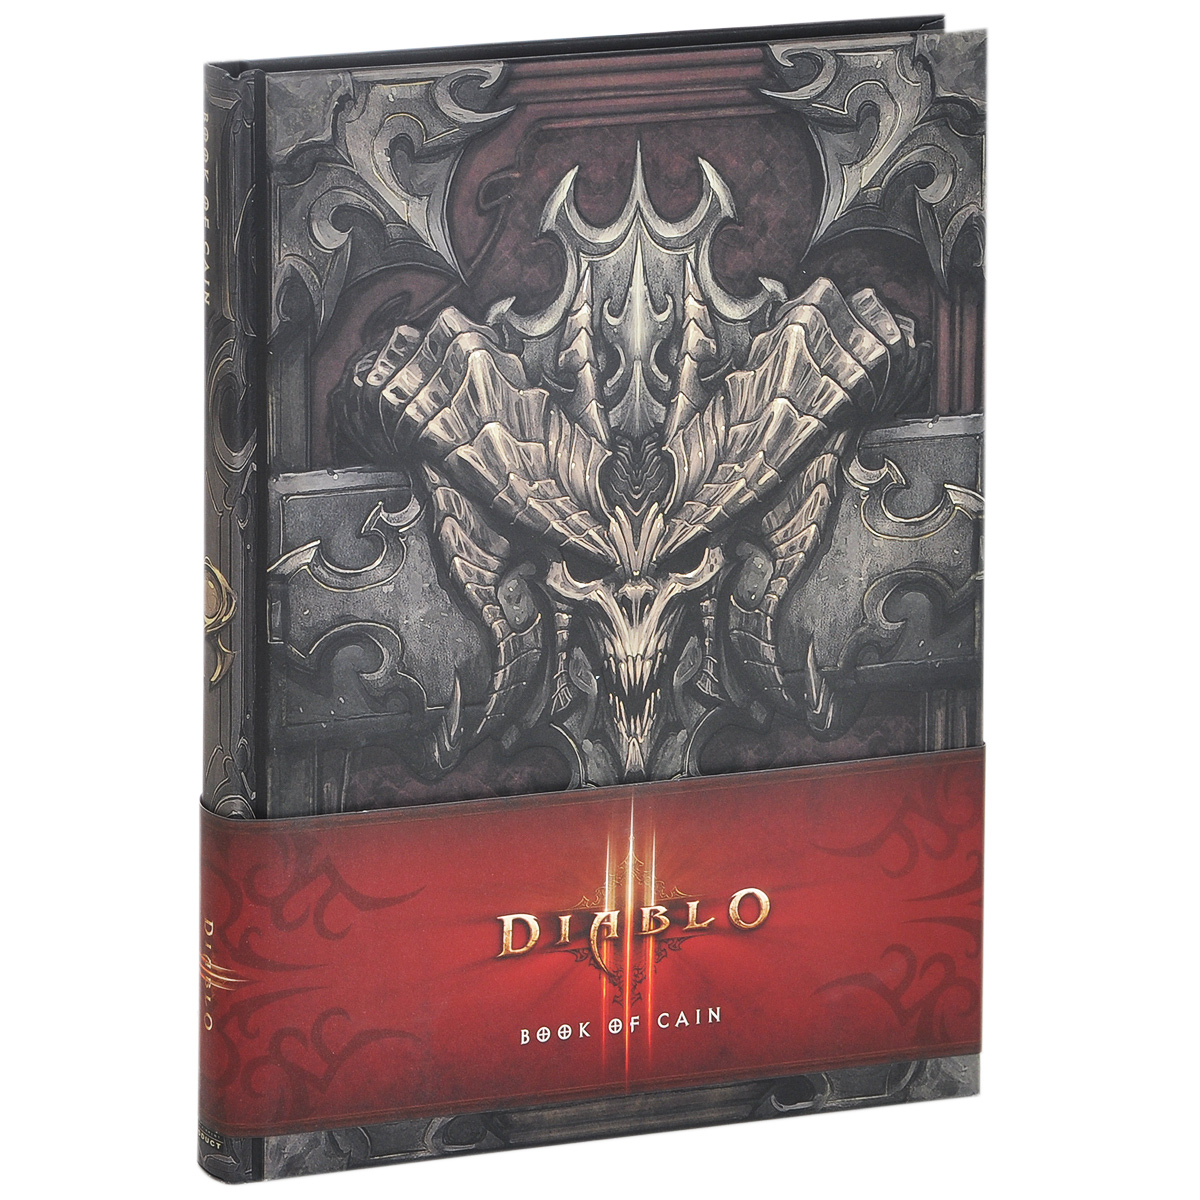 Сай медорфенов книга 3. Diablo III. Книга Каина. Книга диабло книга Каина. Артбук диабло книга Каина. Diablo 3 артбук.